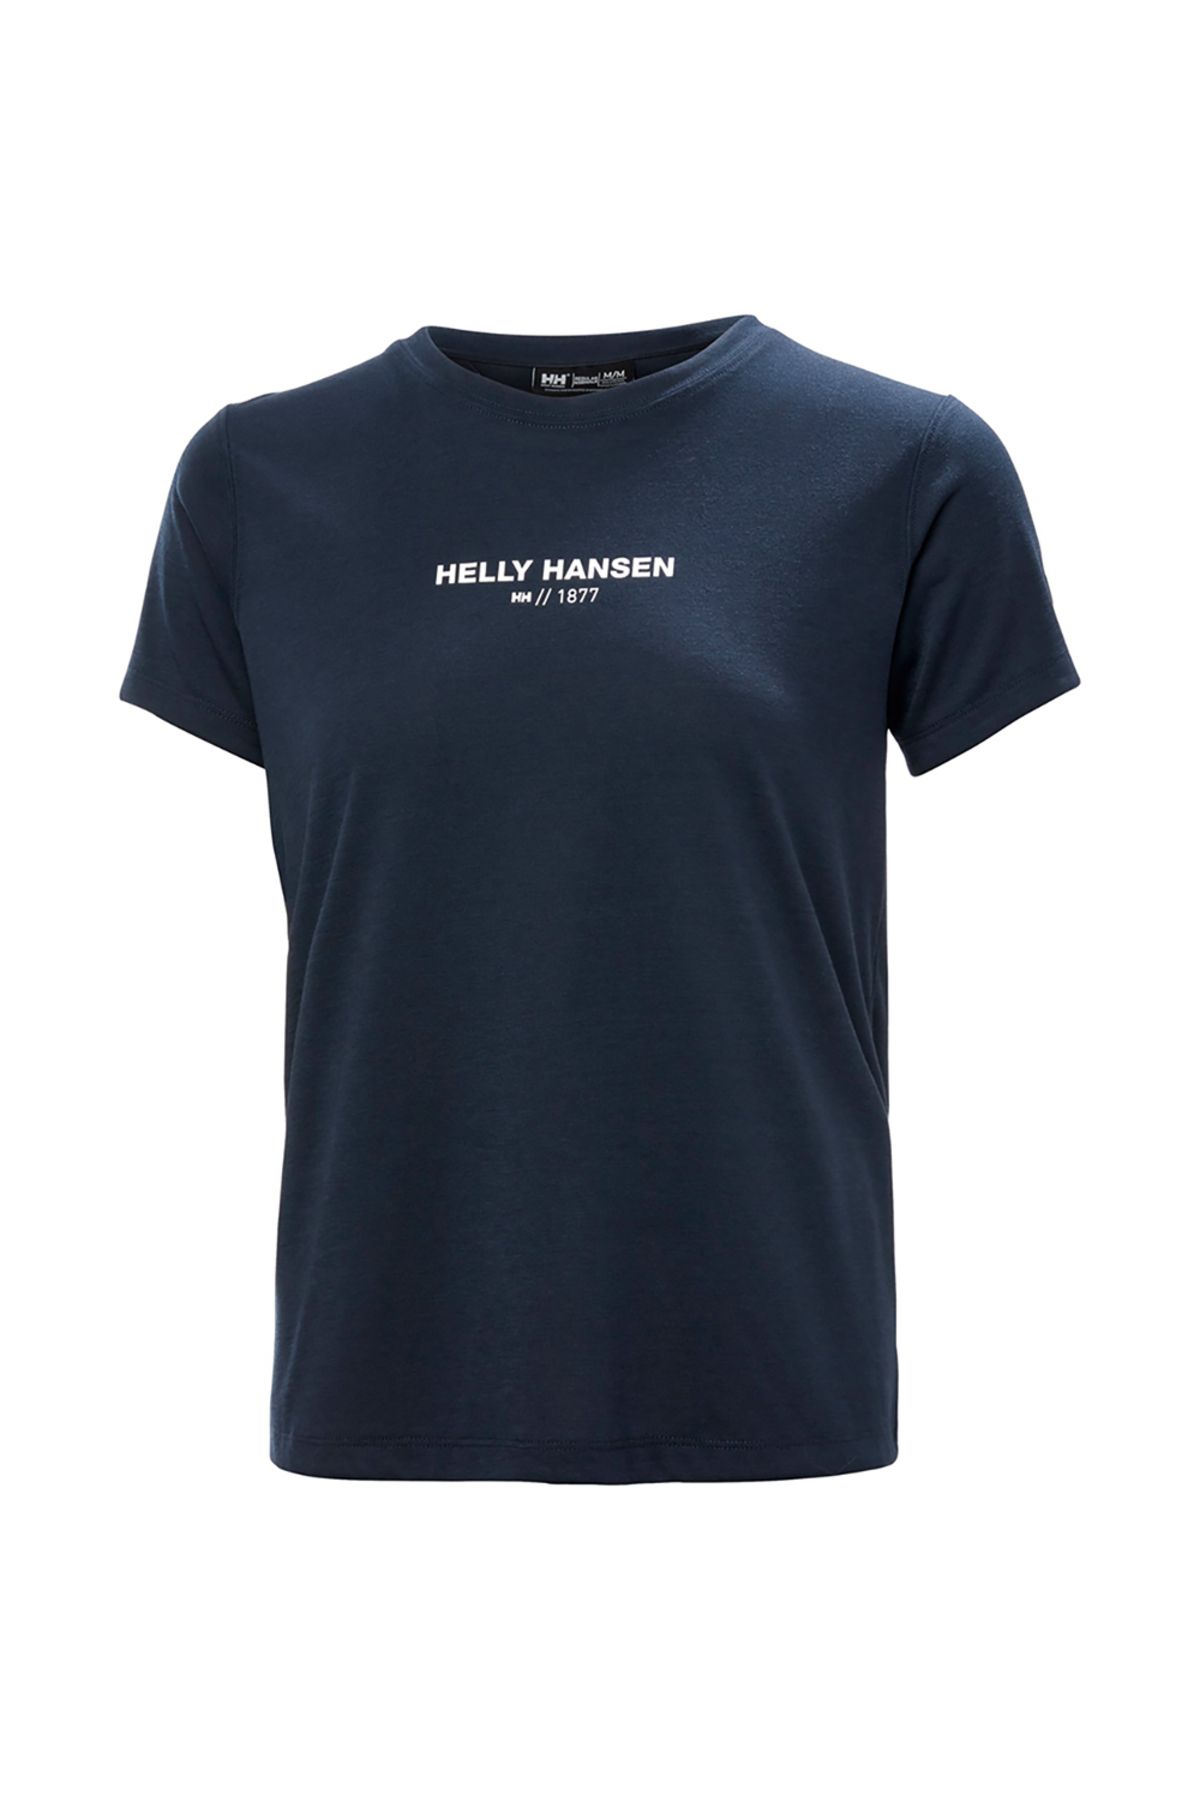 Helly Hansen Allure Kadın Kısa Kollu T-Shirt